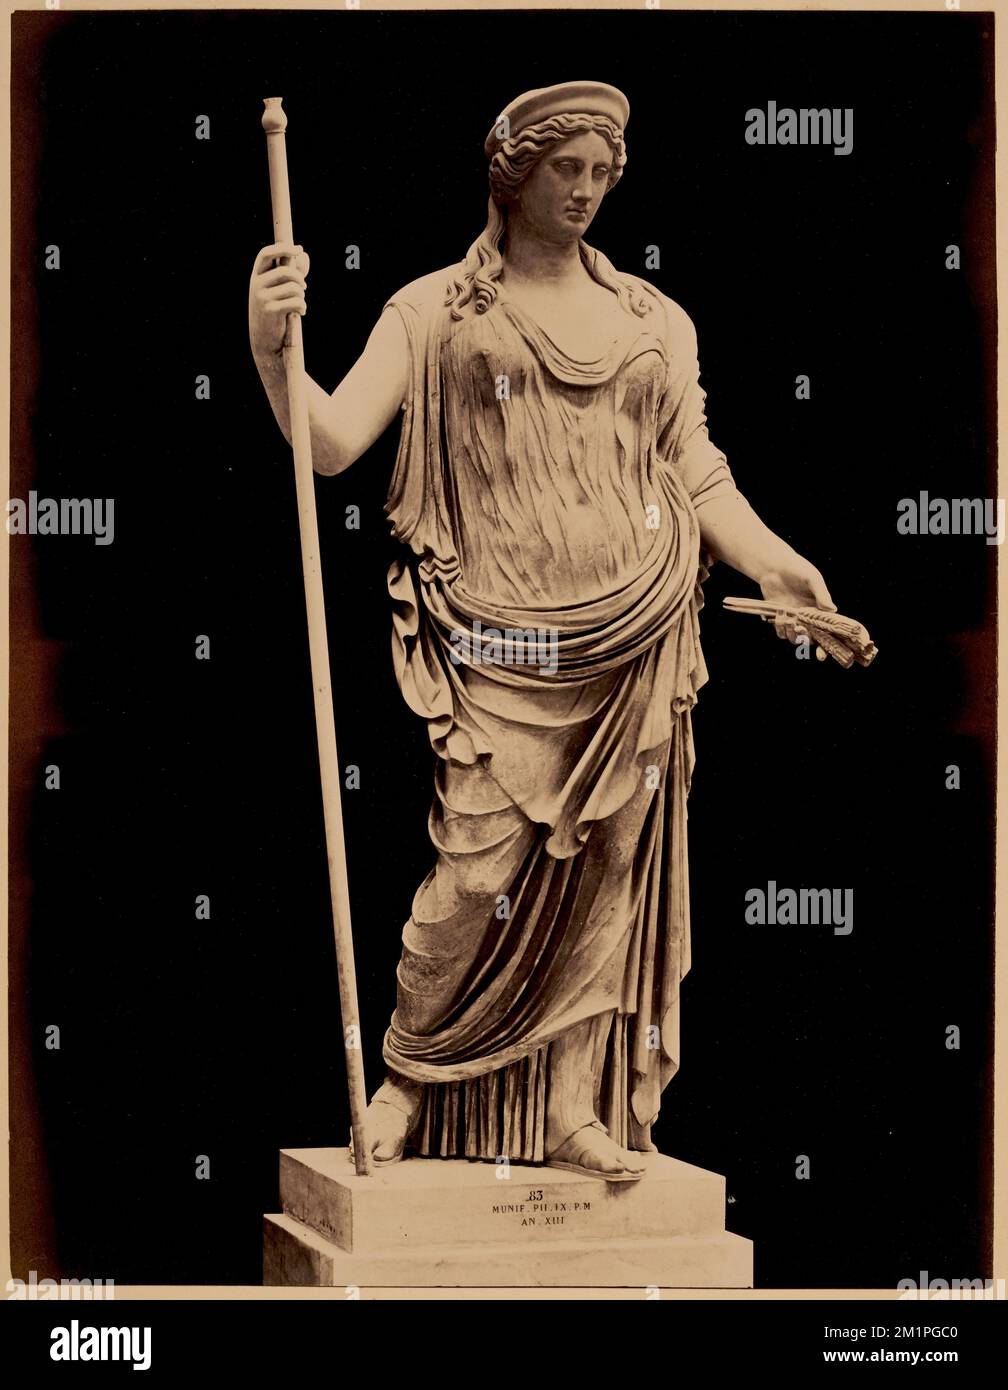 Barberini Hera, Antiquitäten, Skulpturen, Göttinnen, Juno-römische Gottheit, Eine griechische Gottheit. Nicholas Catsimpoolas Kollektion Stockfoto